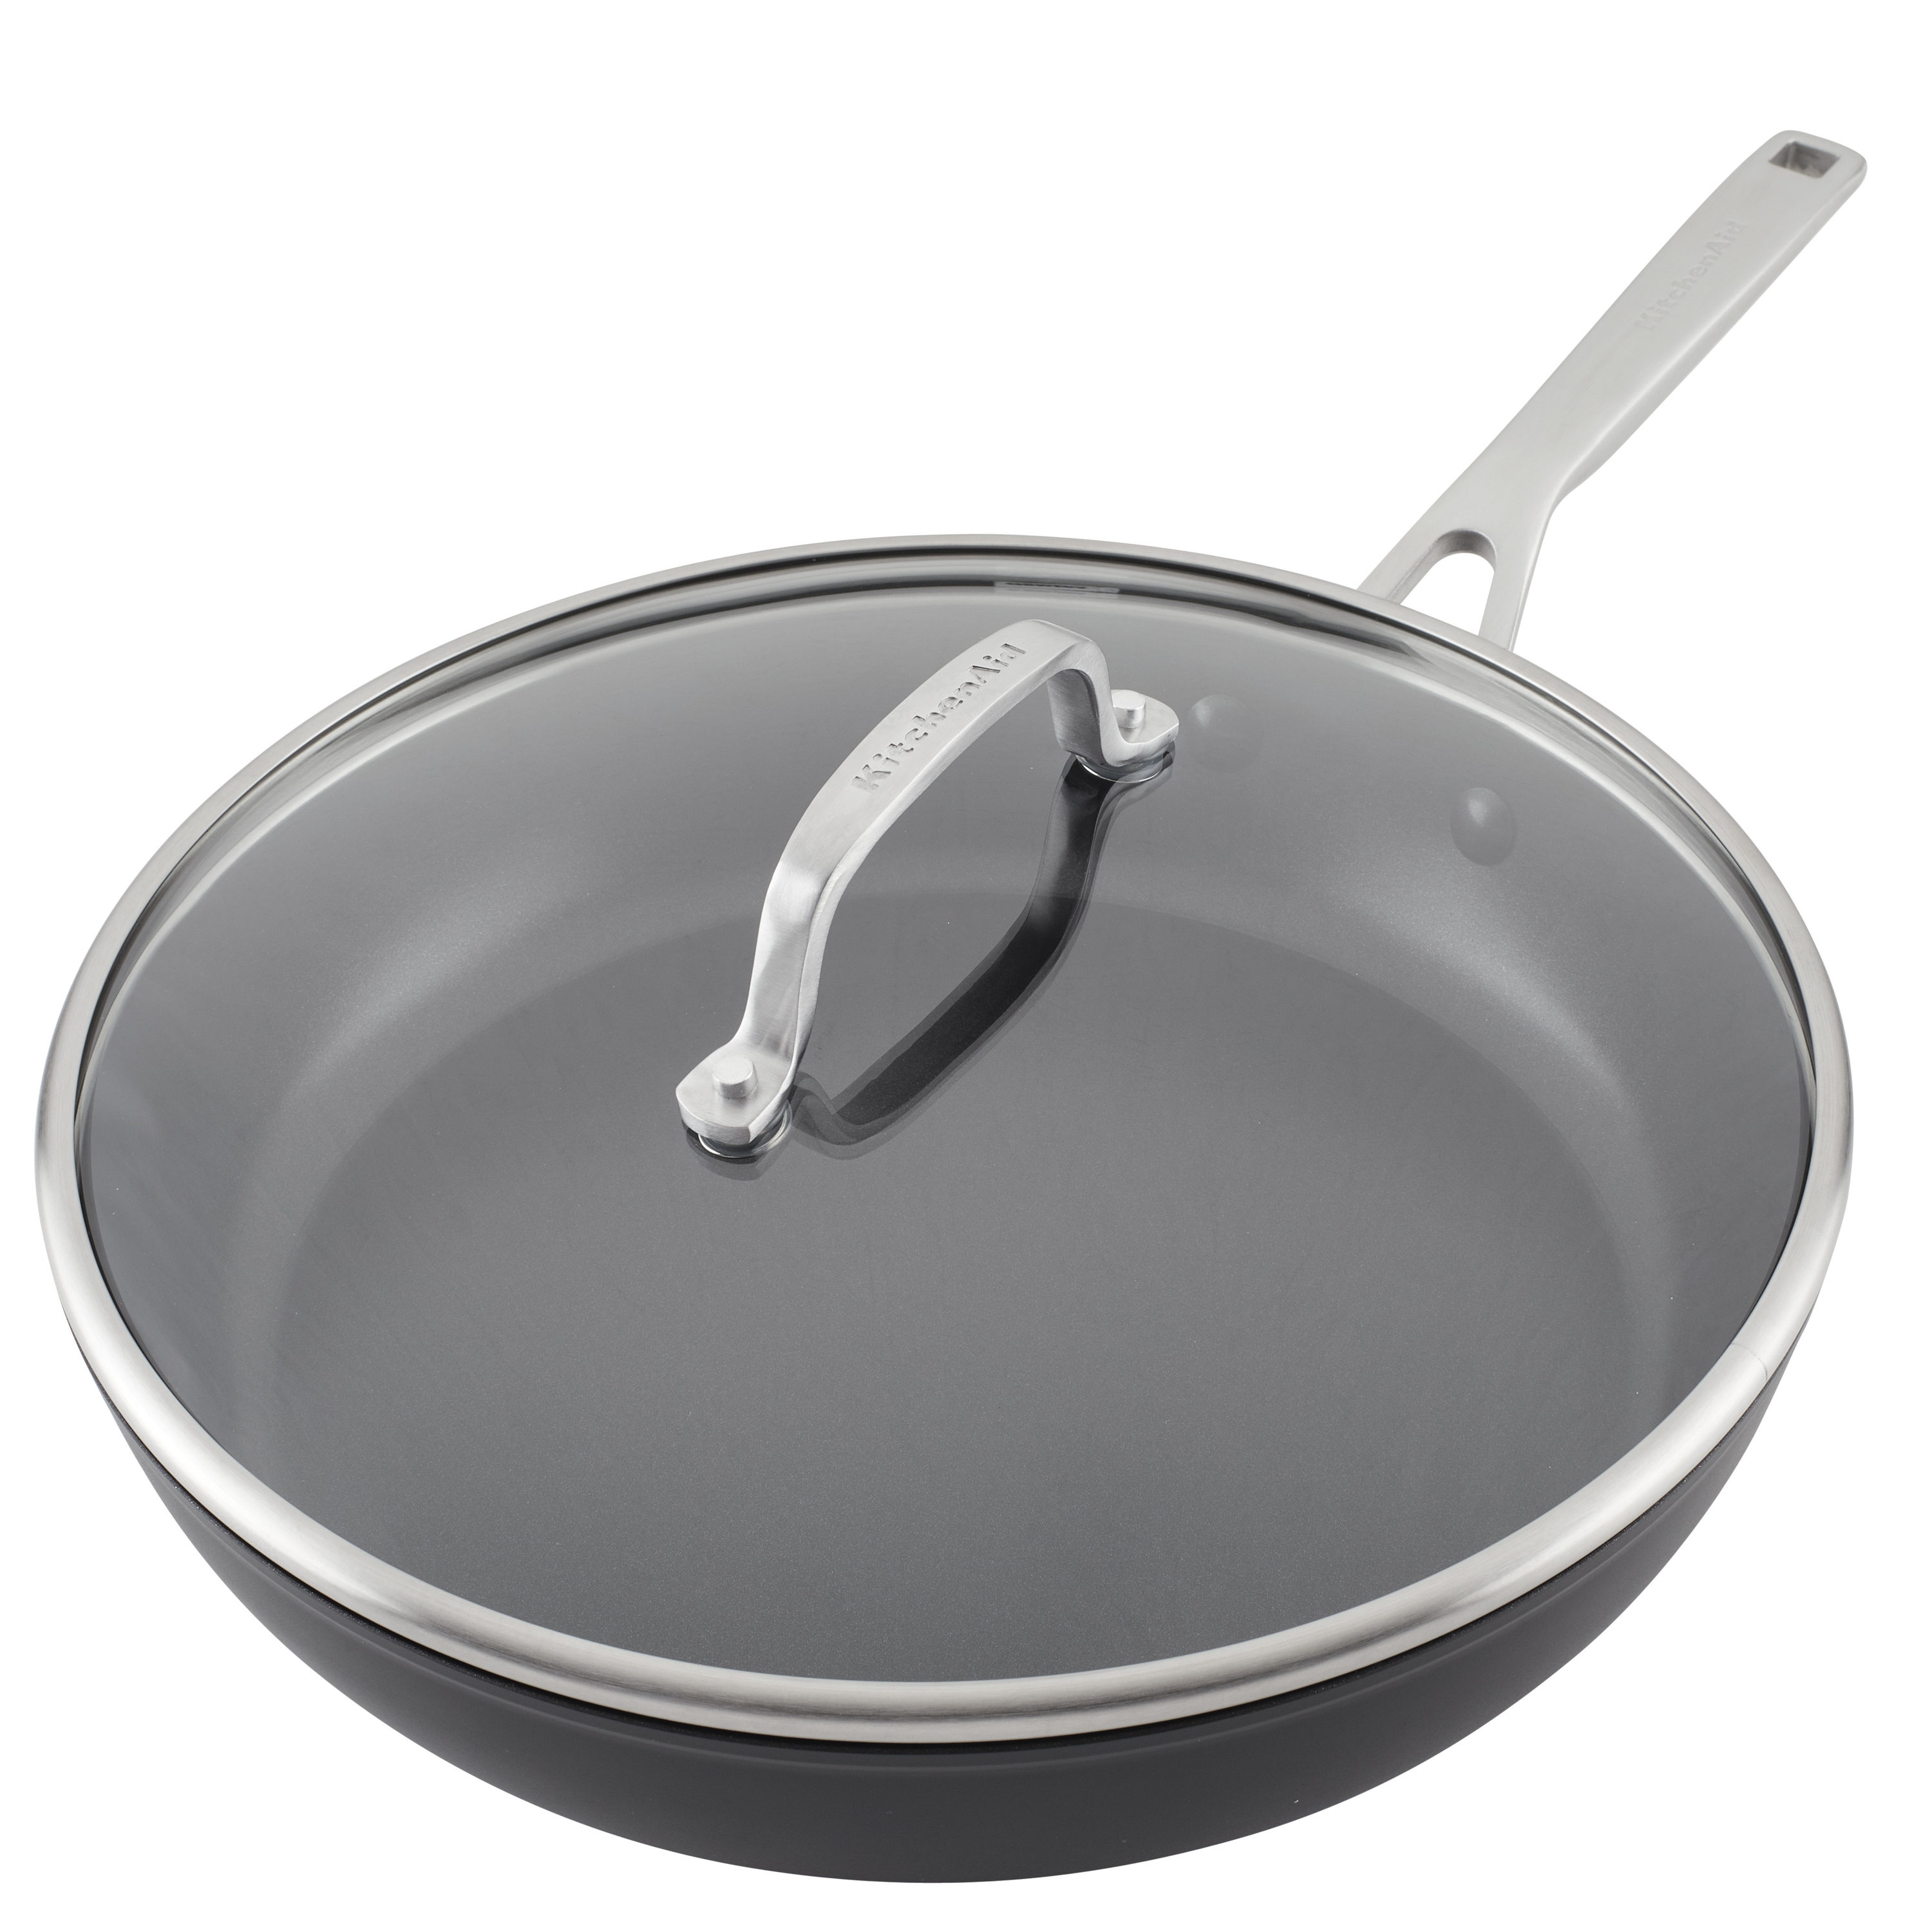 KitchenAid Hard-Anodized Nonstick 2-Piece Frying Pan Set